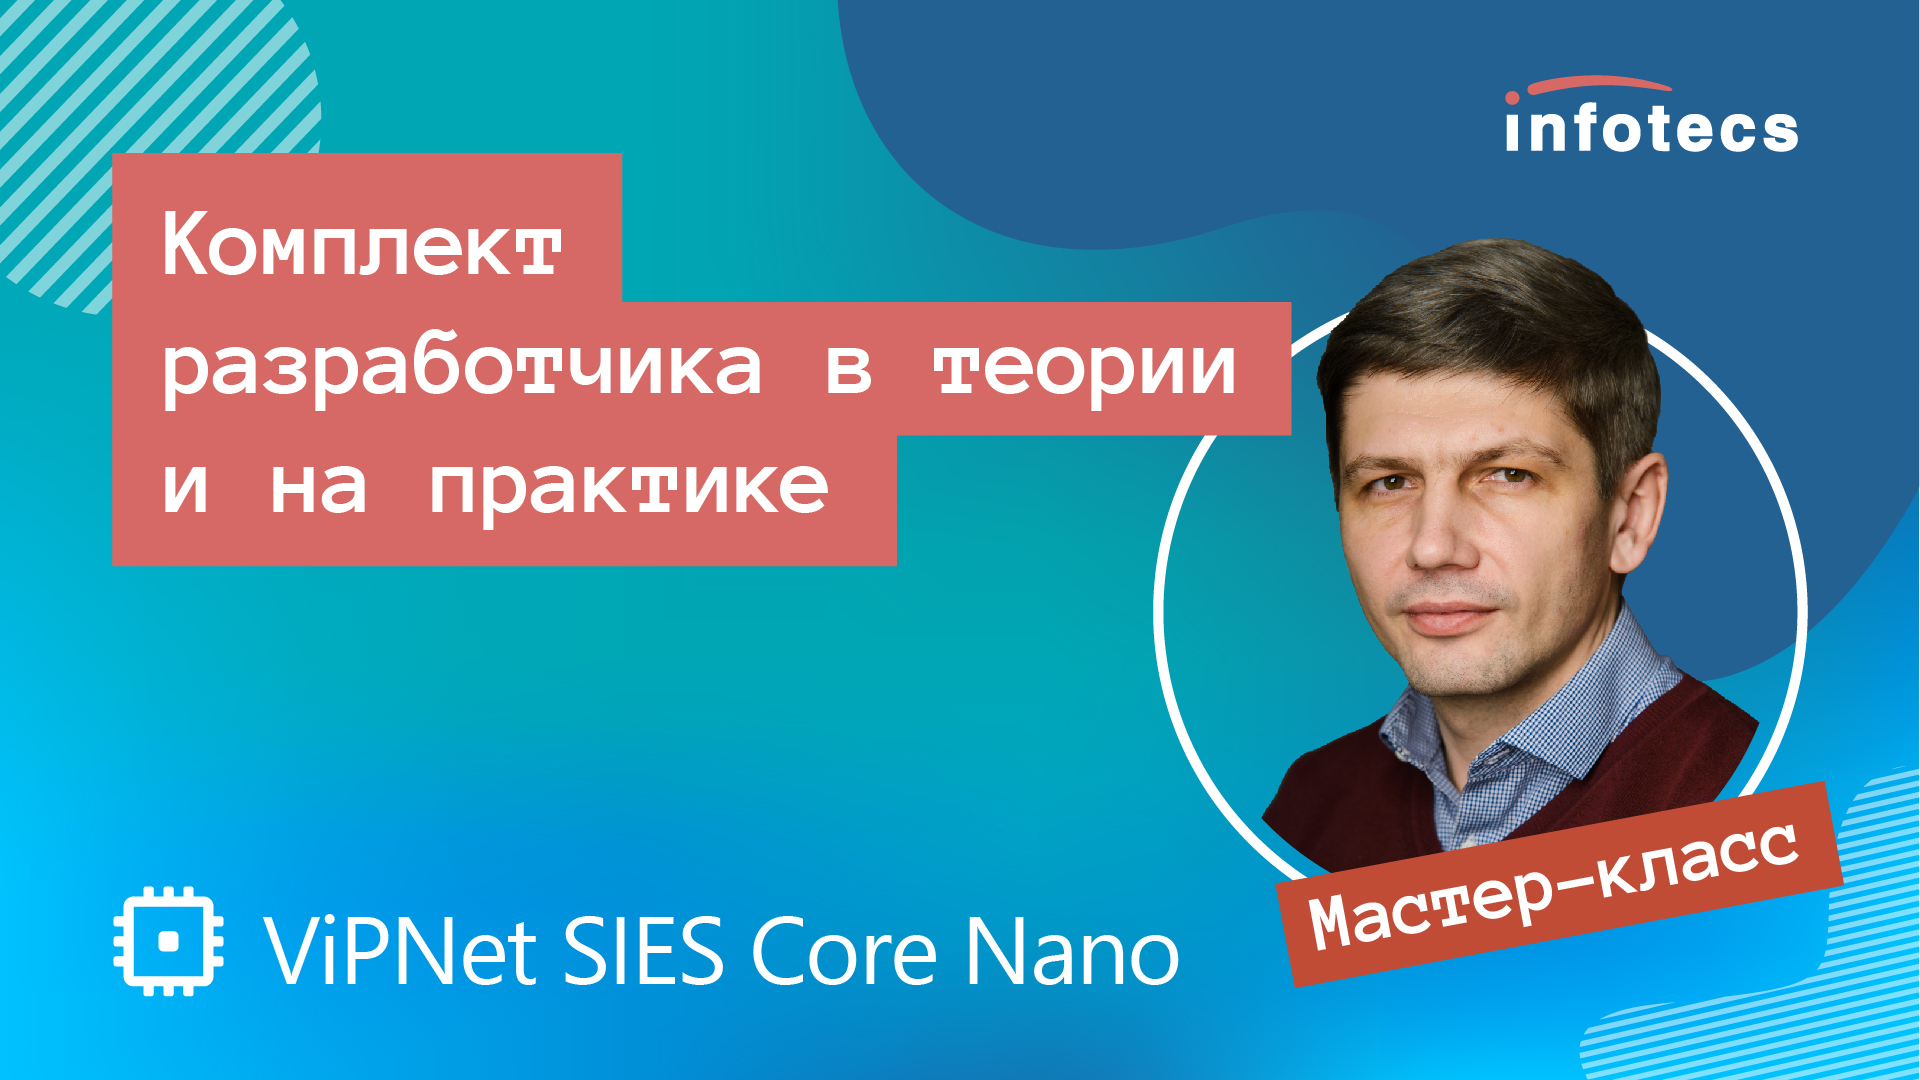 Мастер-класс «Комплект разработчика ViPNet SIES Core Nano в теории и на практике»